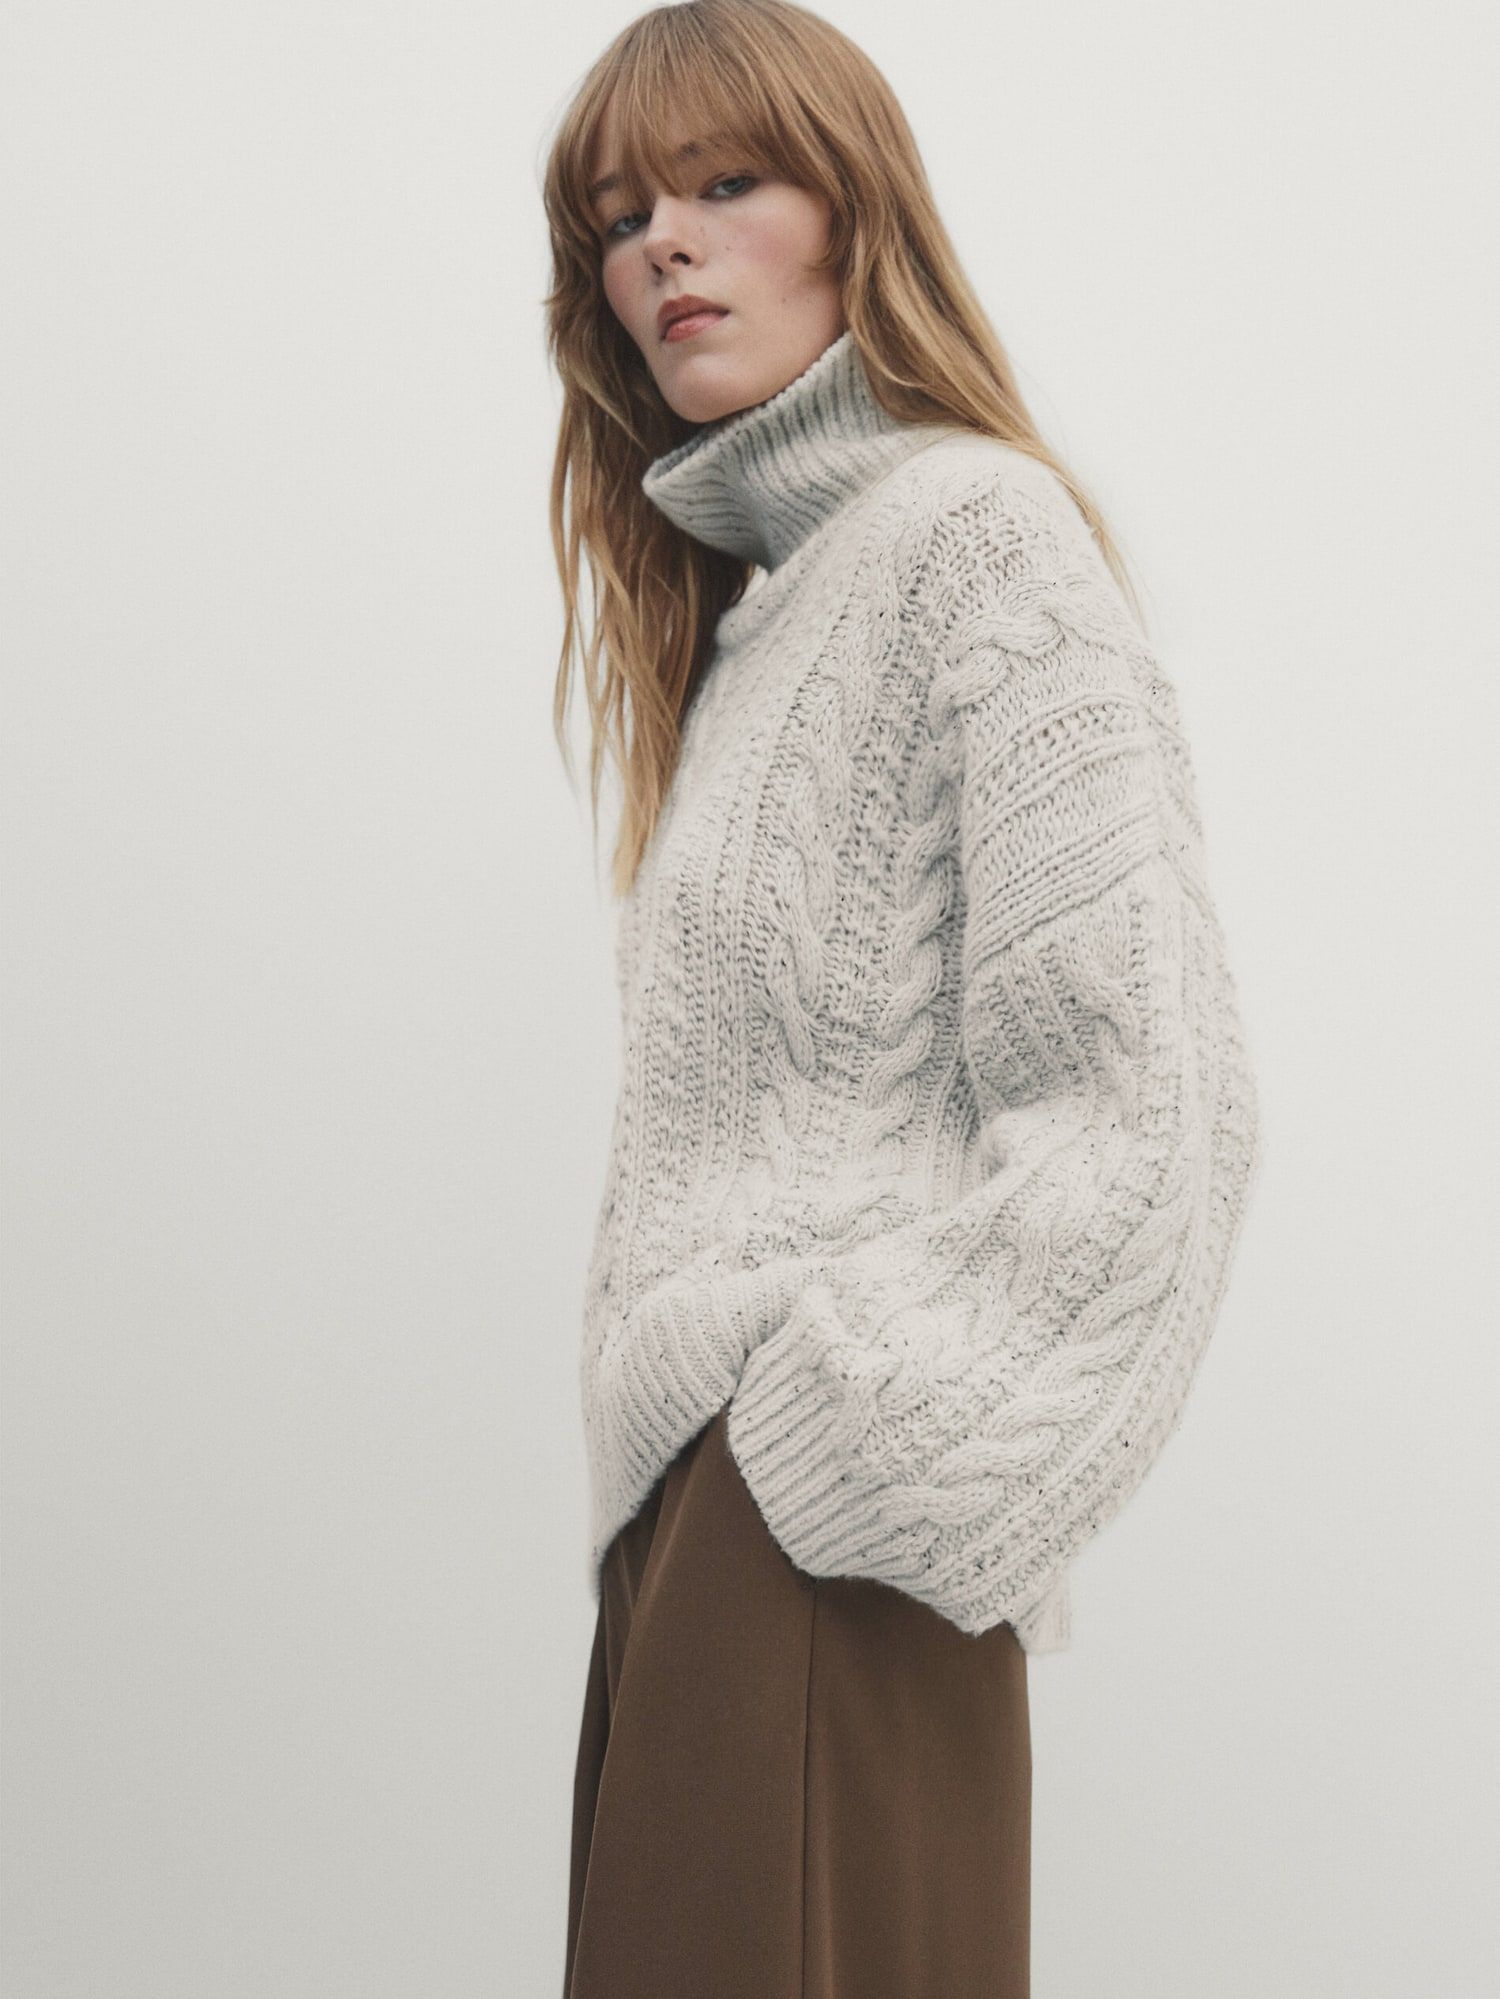 Knickerbocker yarn cable-knit sweater with a high neck | Massimo Dutti UK